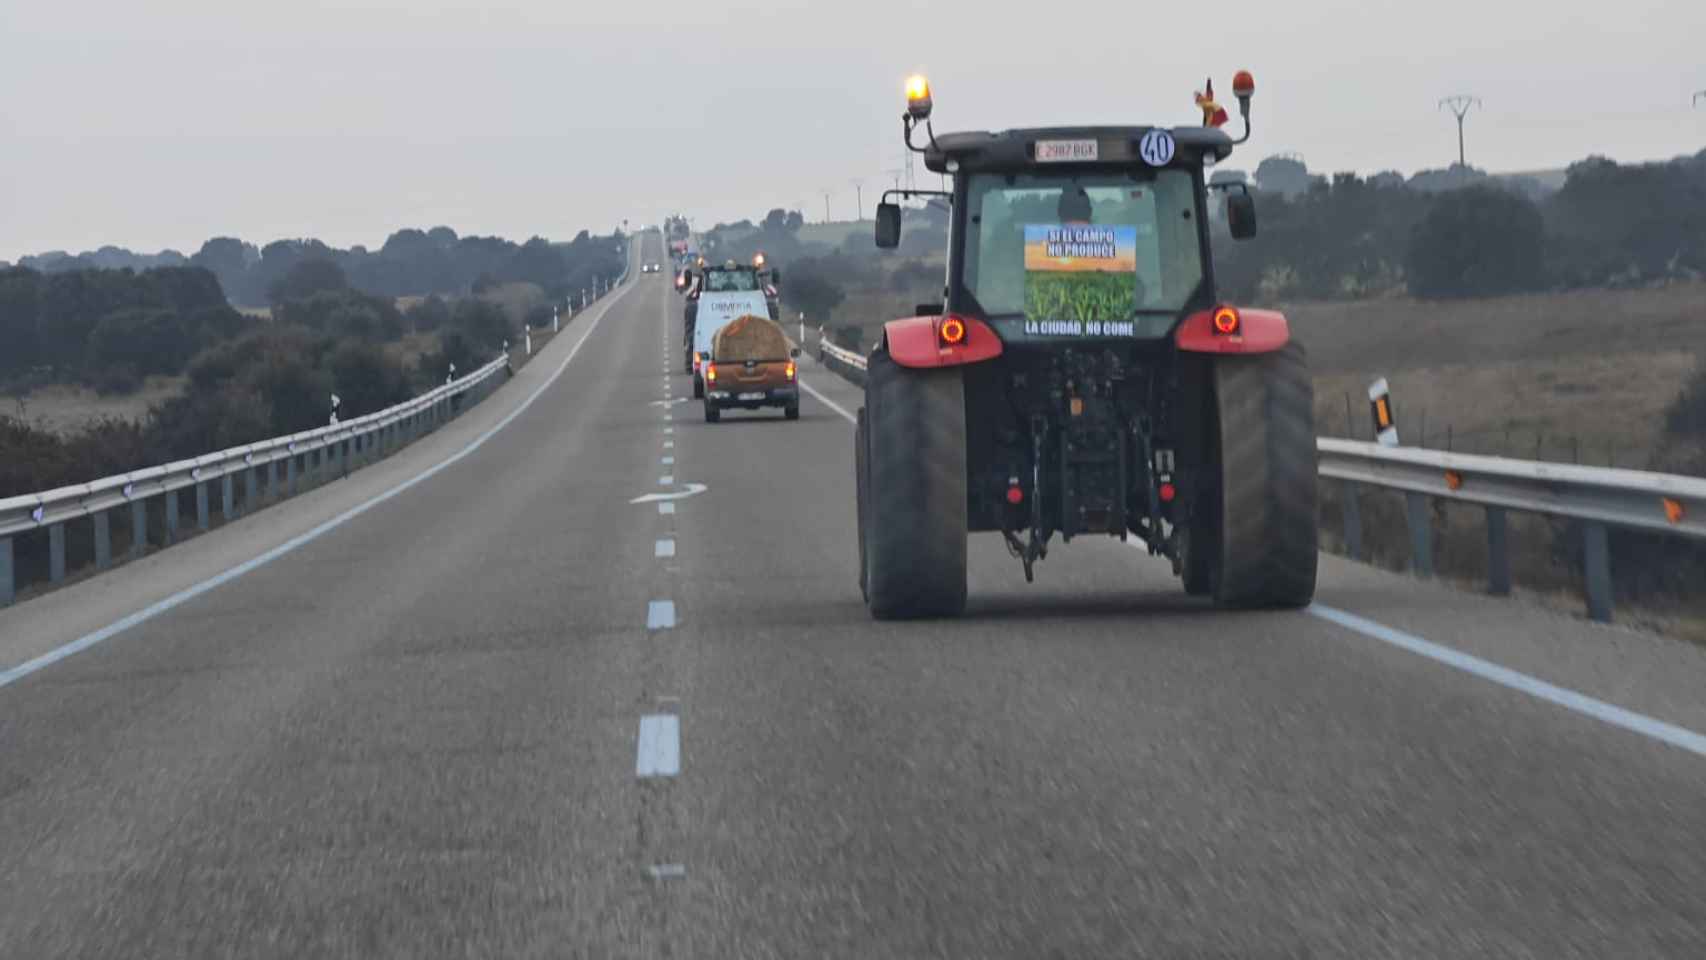 Tractorada en Zamora